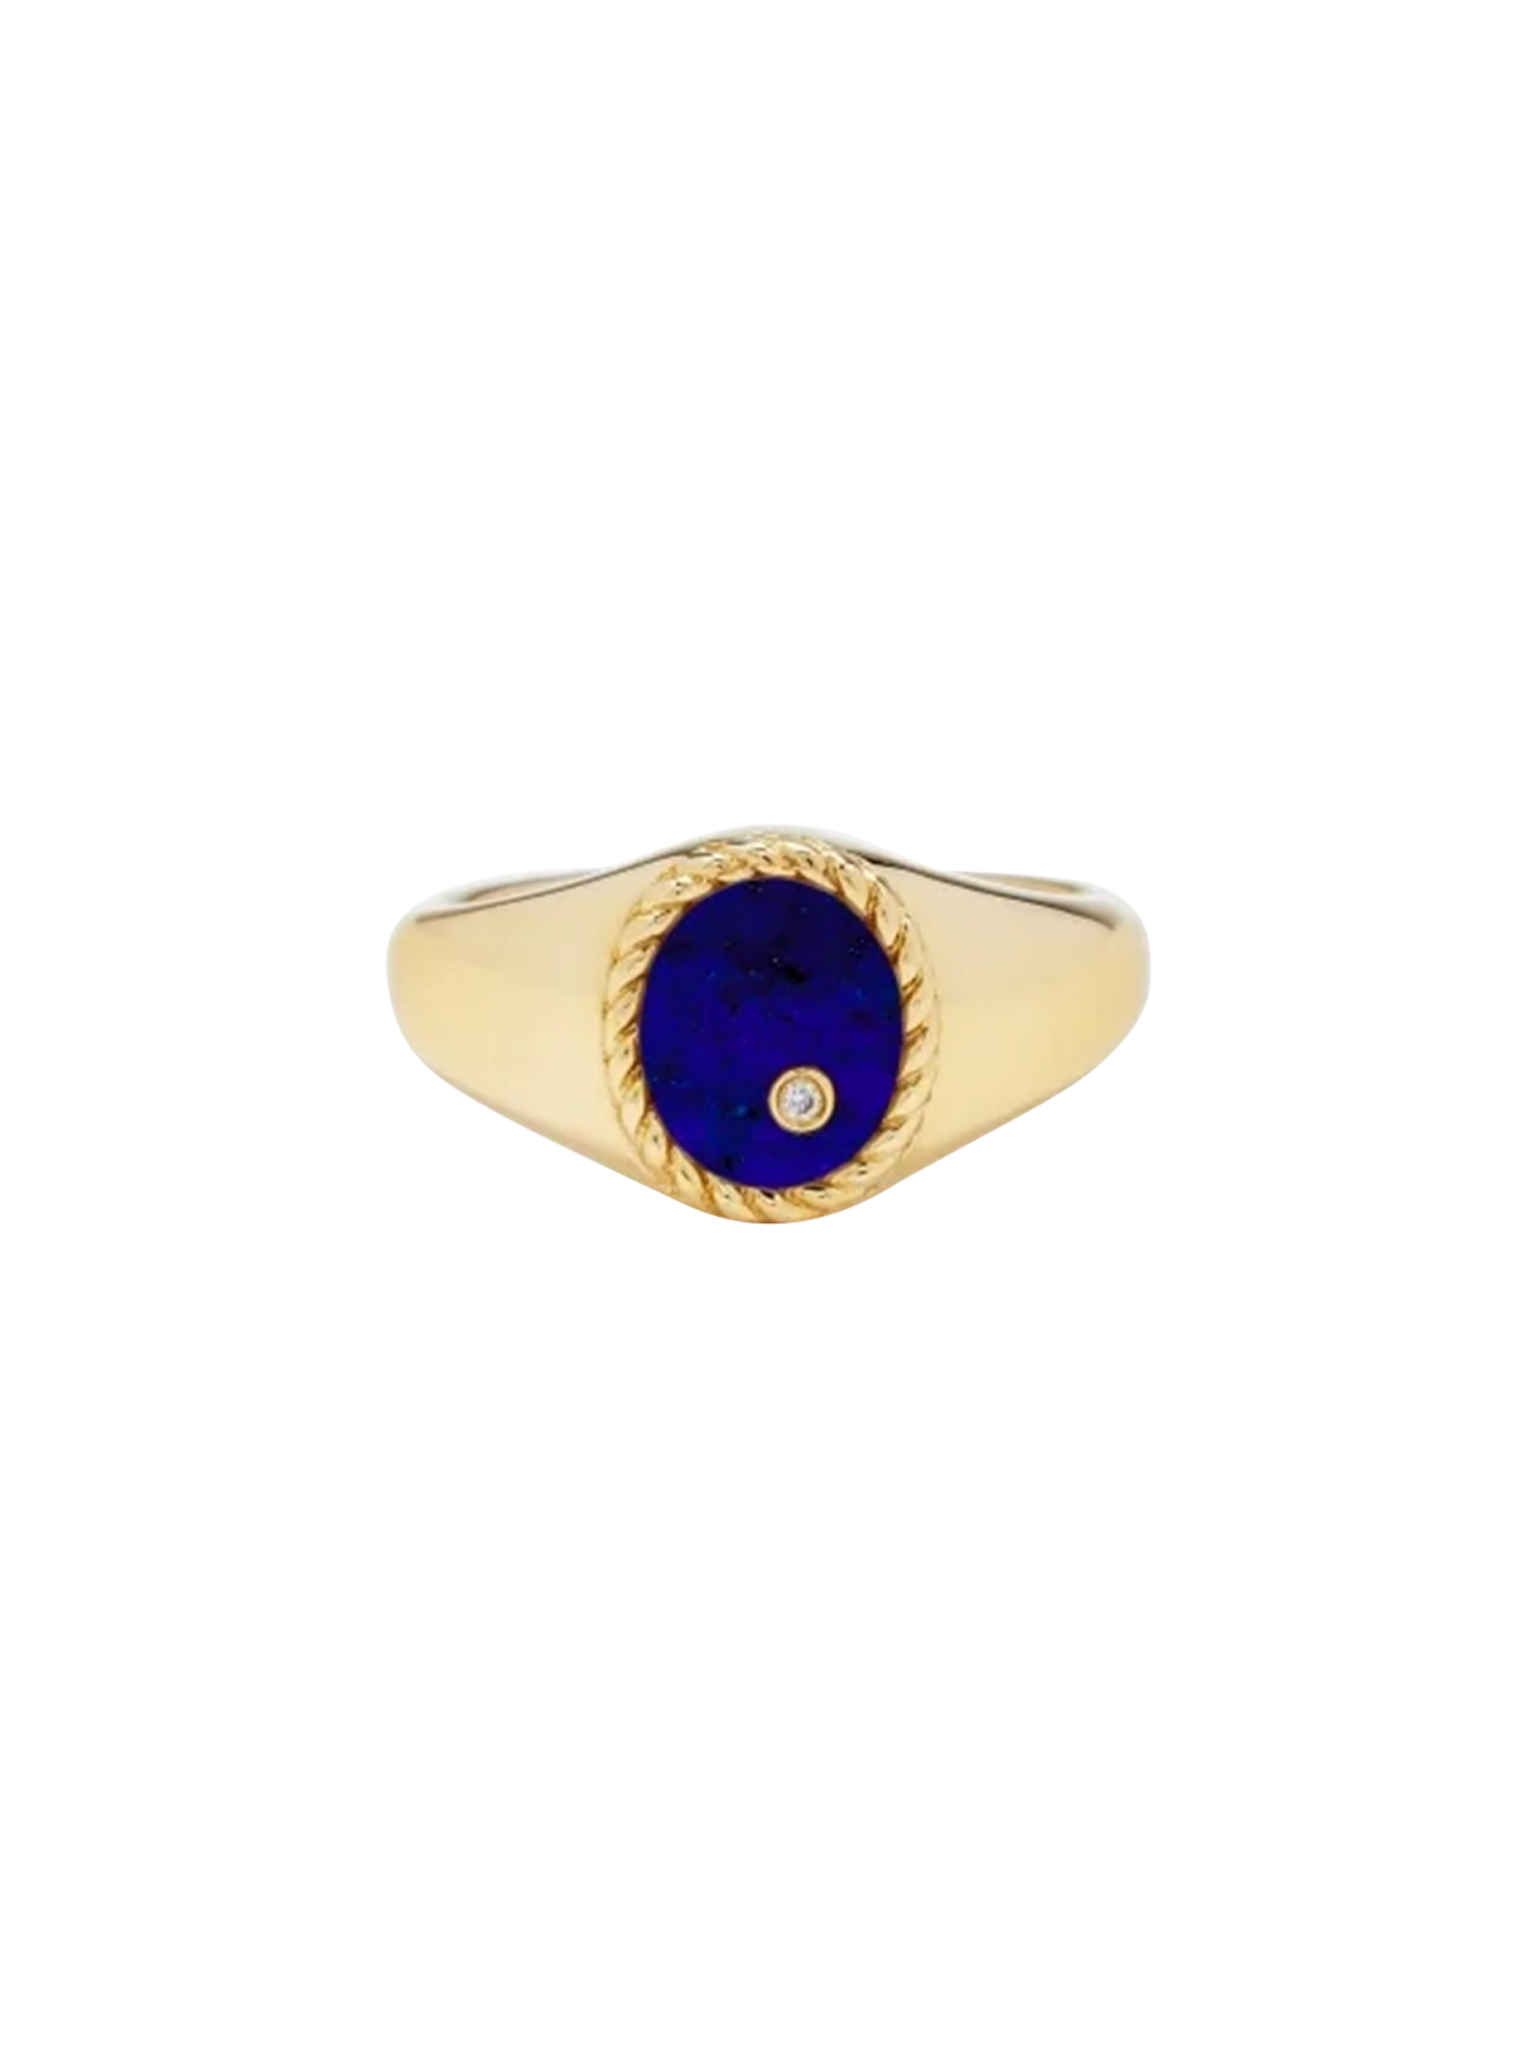 Baby chevalière ovale lapis lazuli or jaune ring